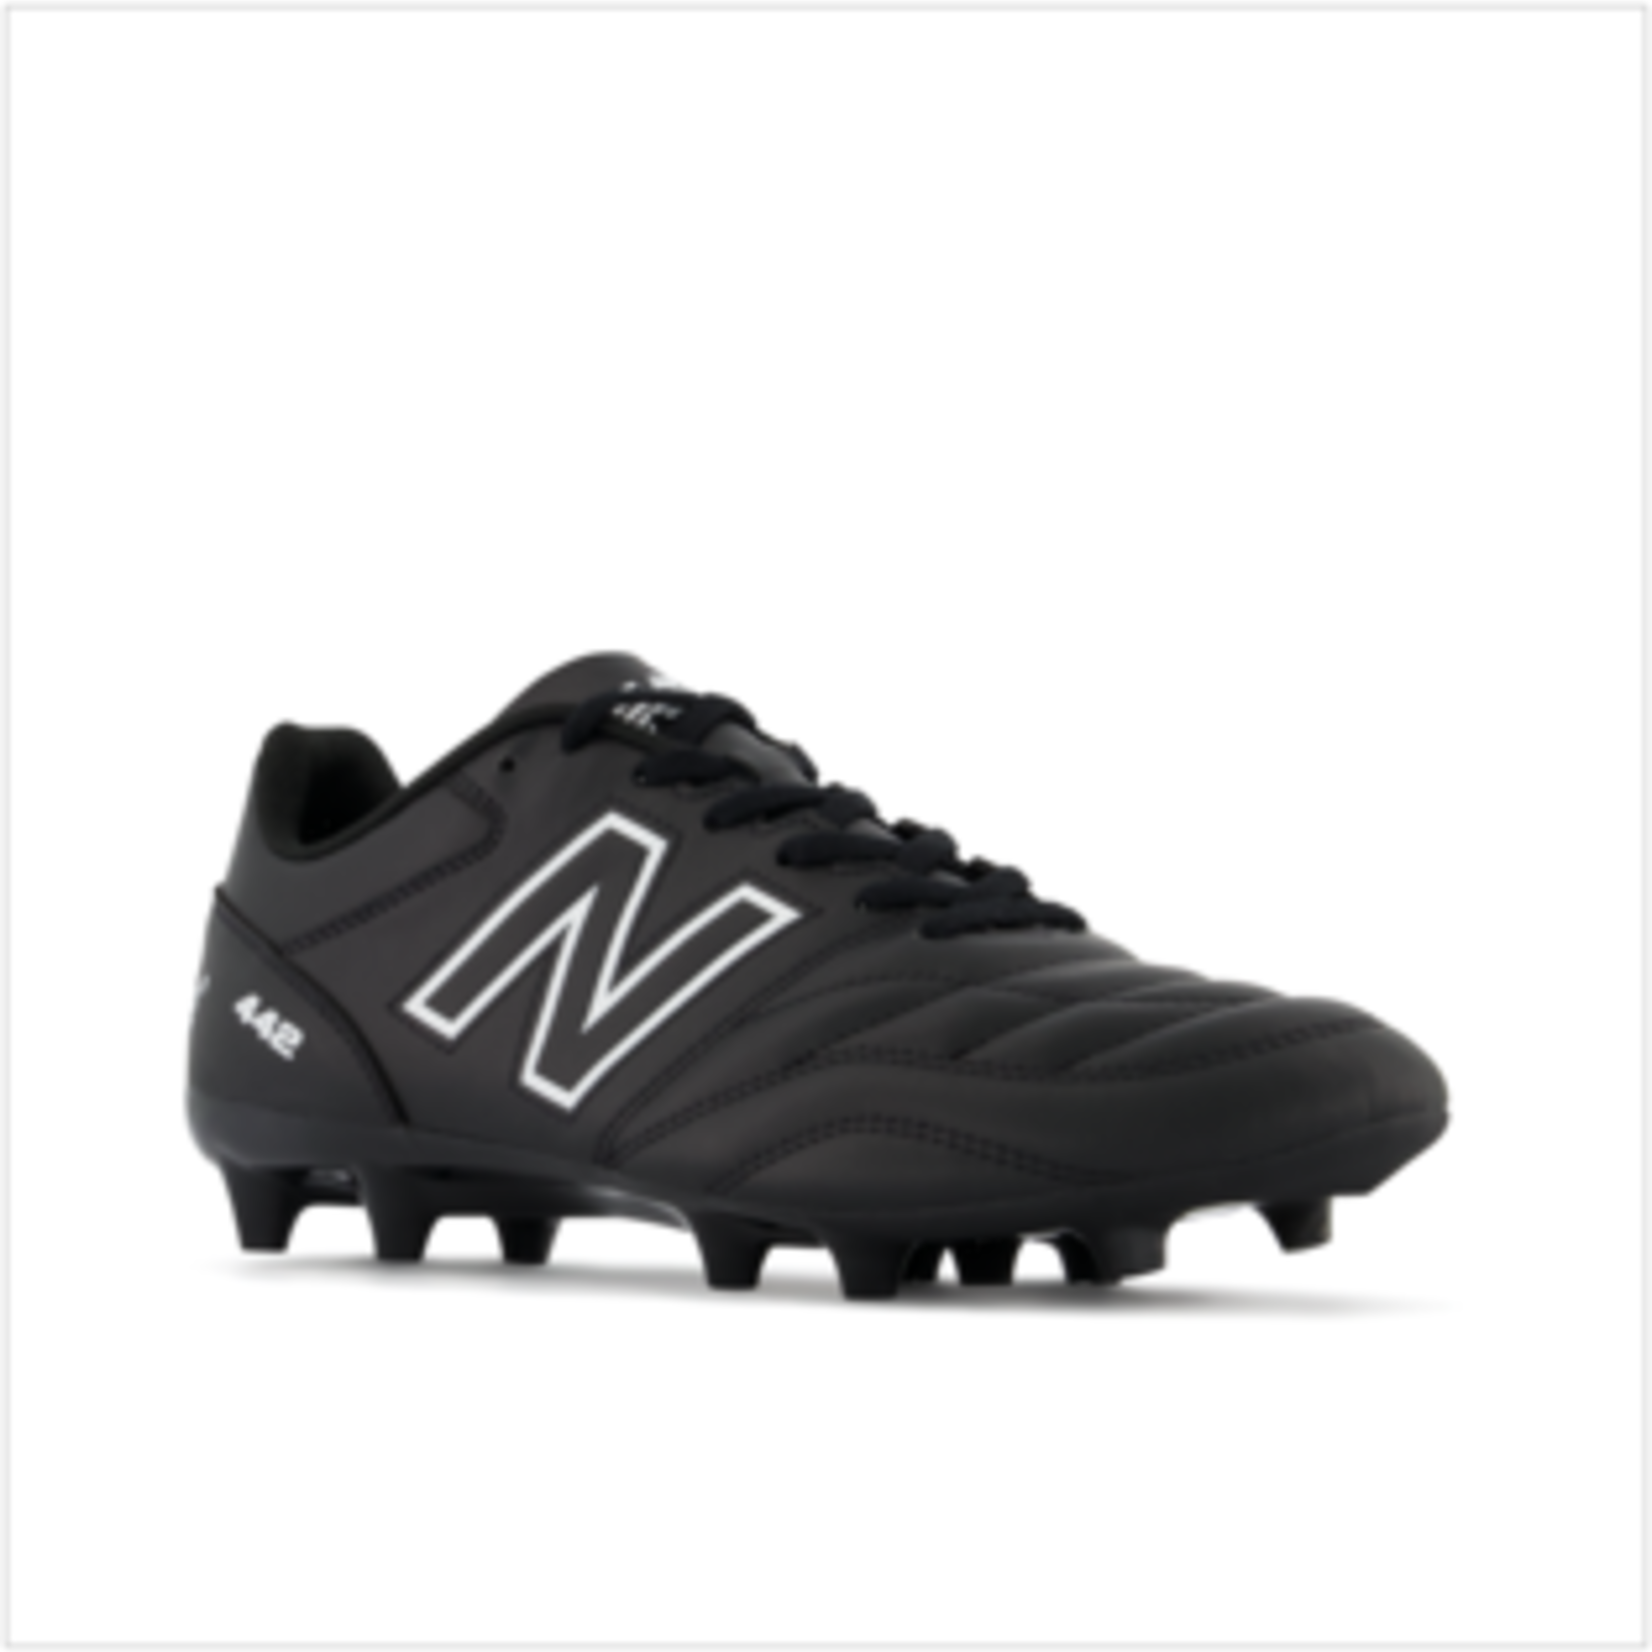 New Balance New Balance Soccer Shoes, 442 v2 Academy FG, Mens